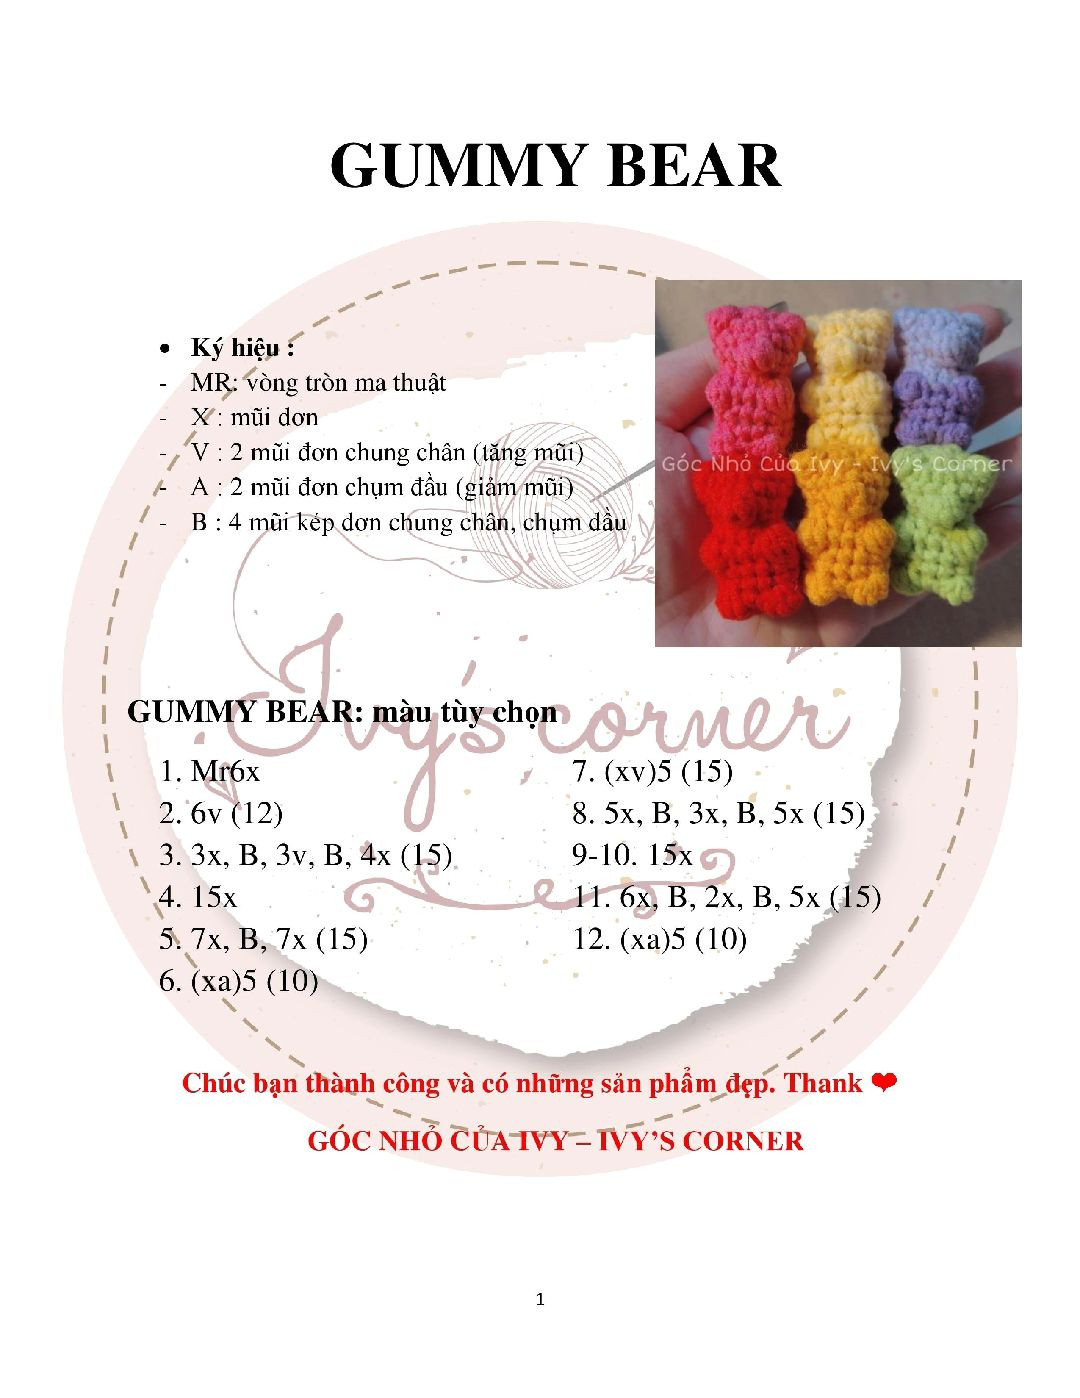 chart móc gummy bear.